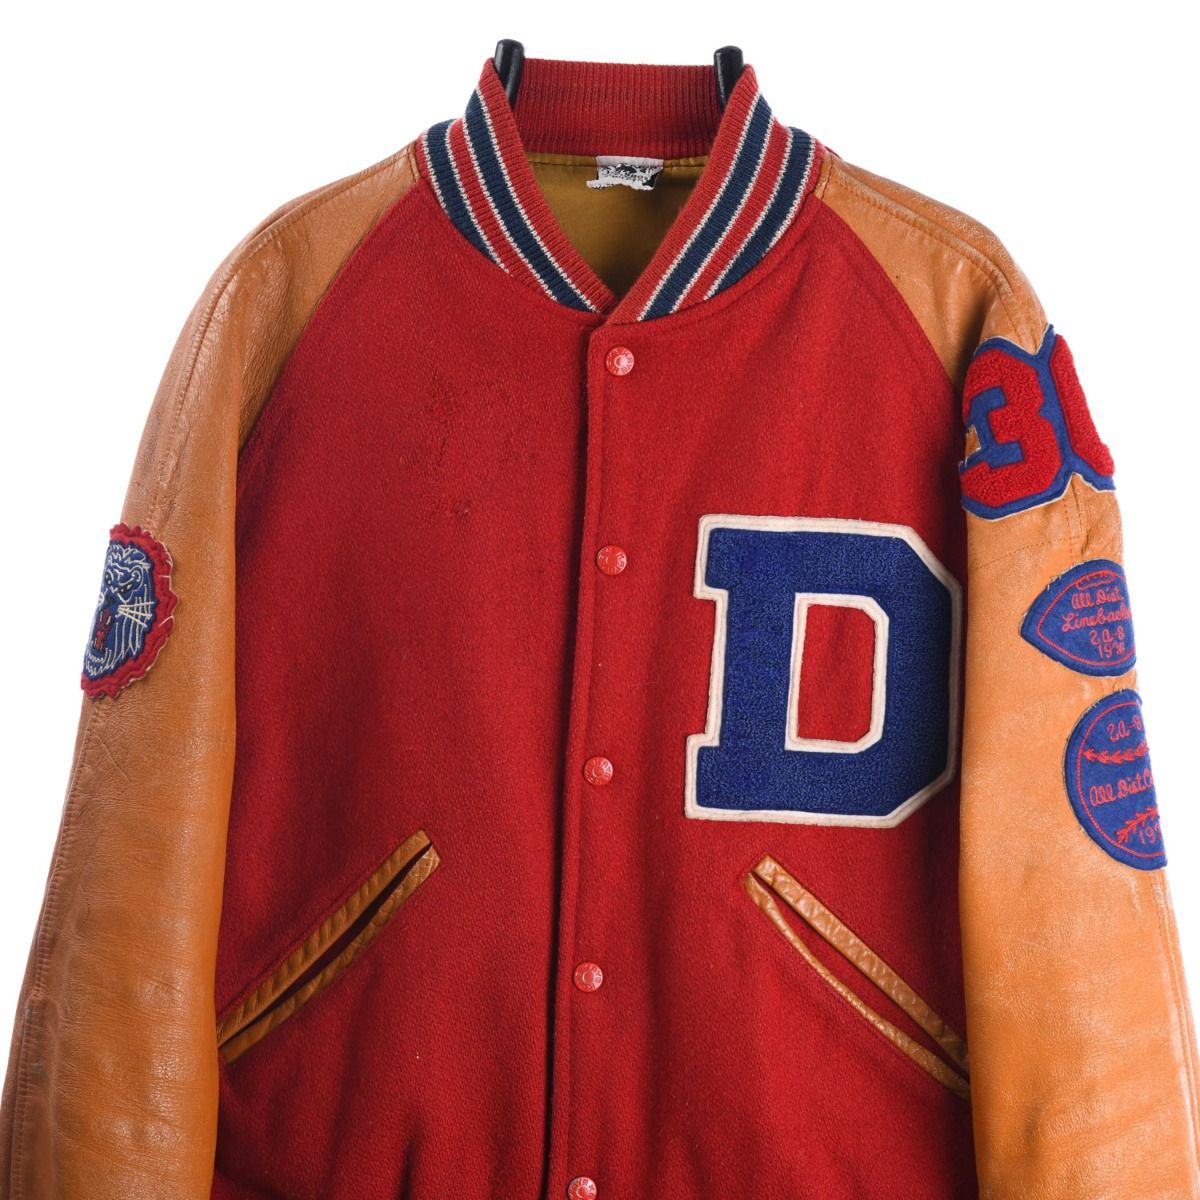 Vintage 1970s Varsity Jacket